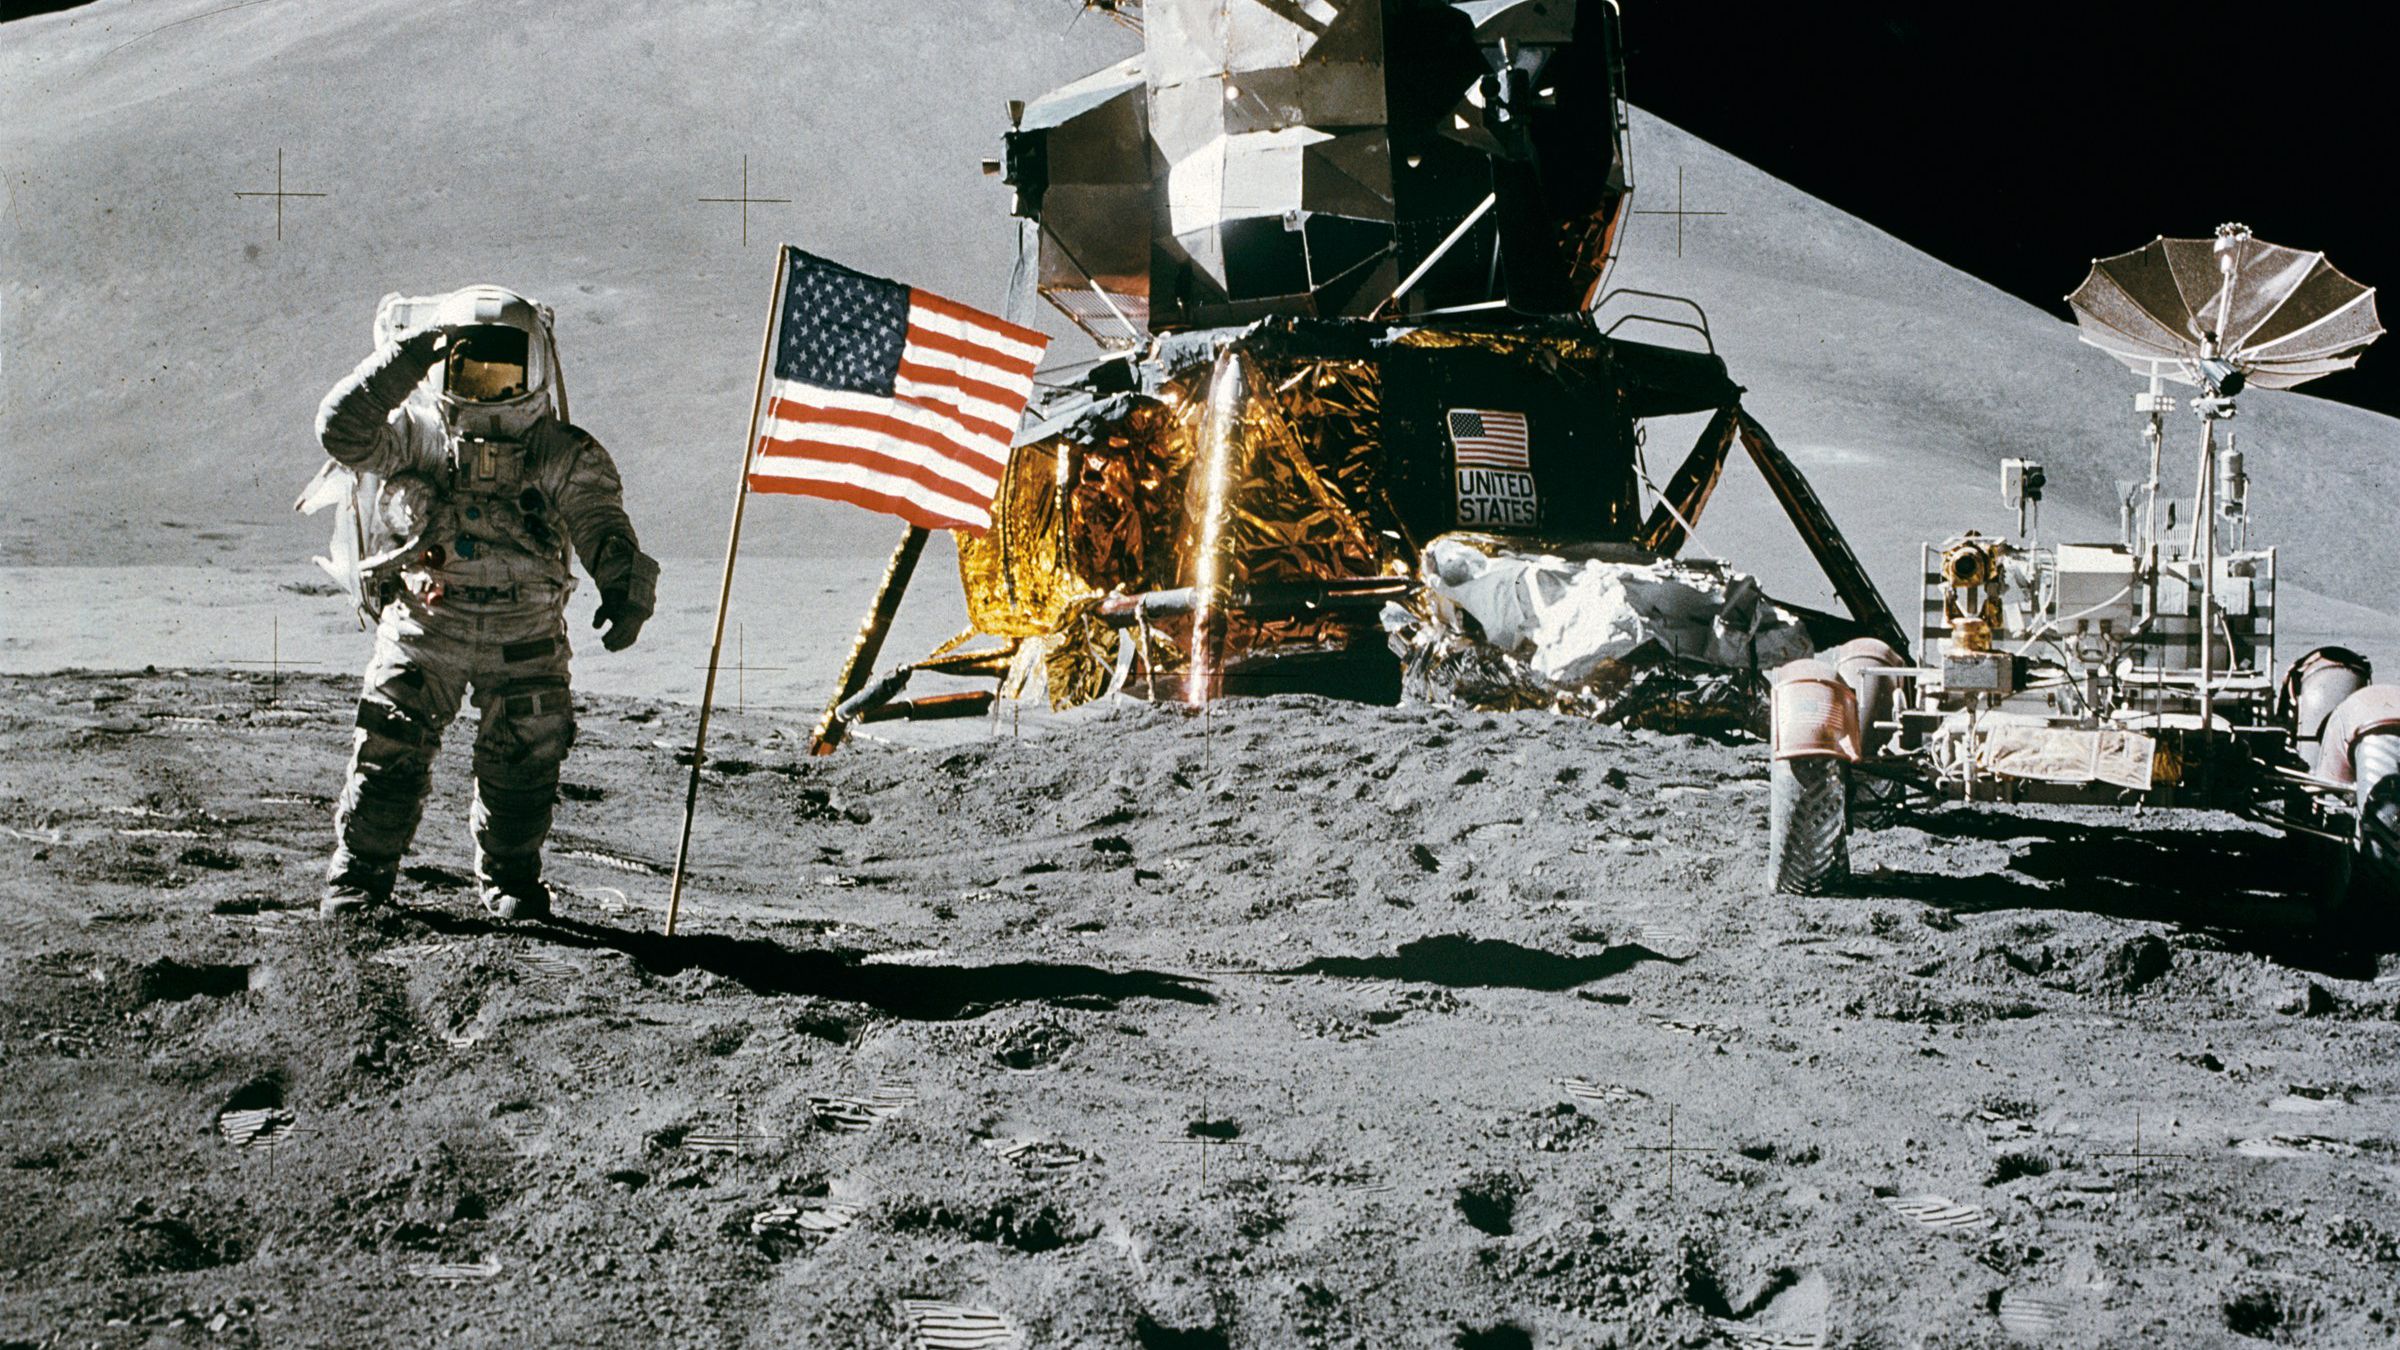 Сколько высаживались на луну. Аполлон 11 1969. Аполлон 15 на Луне. Миссия Аполлон 11. Высадка людей на луну 1969.